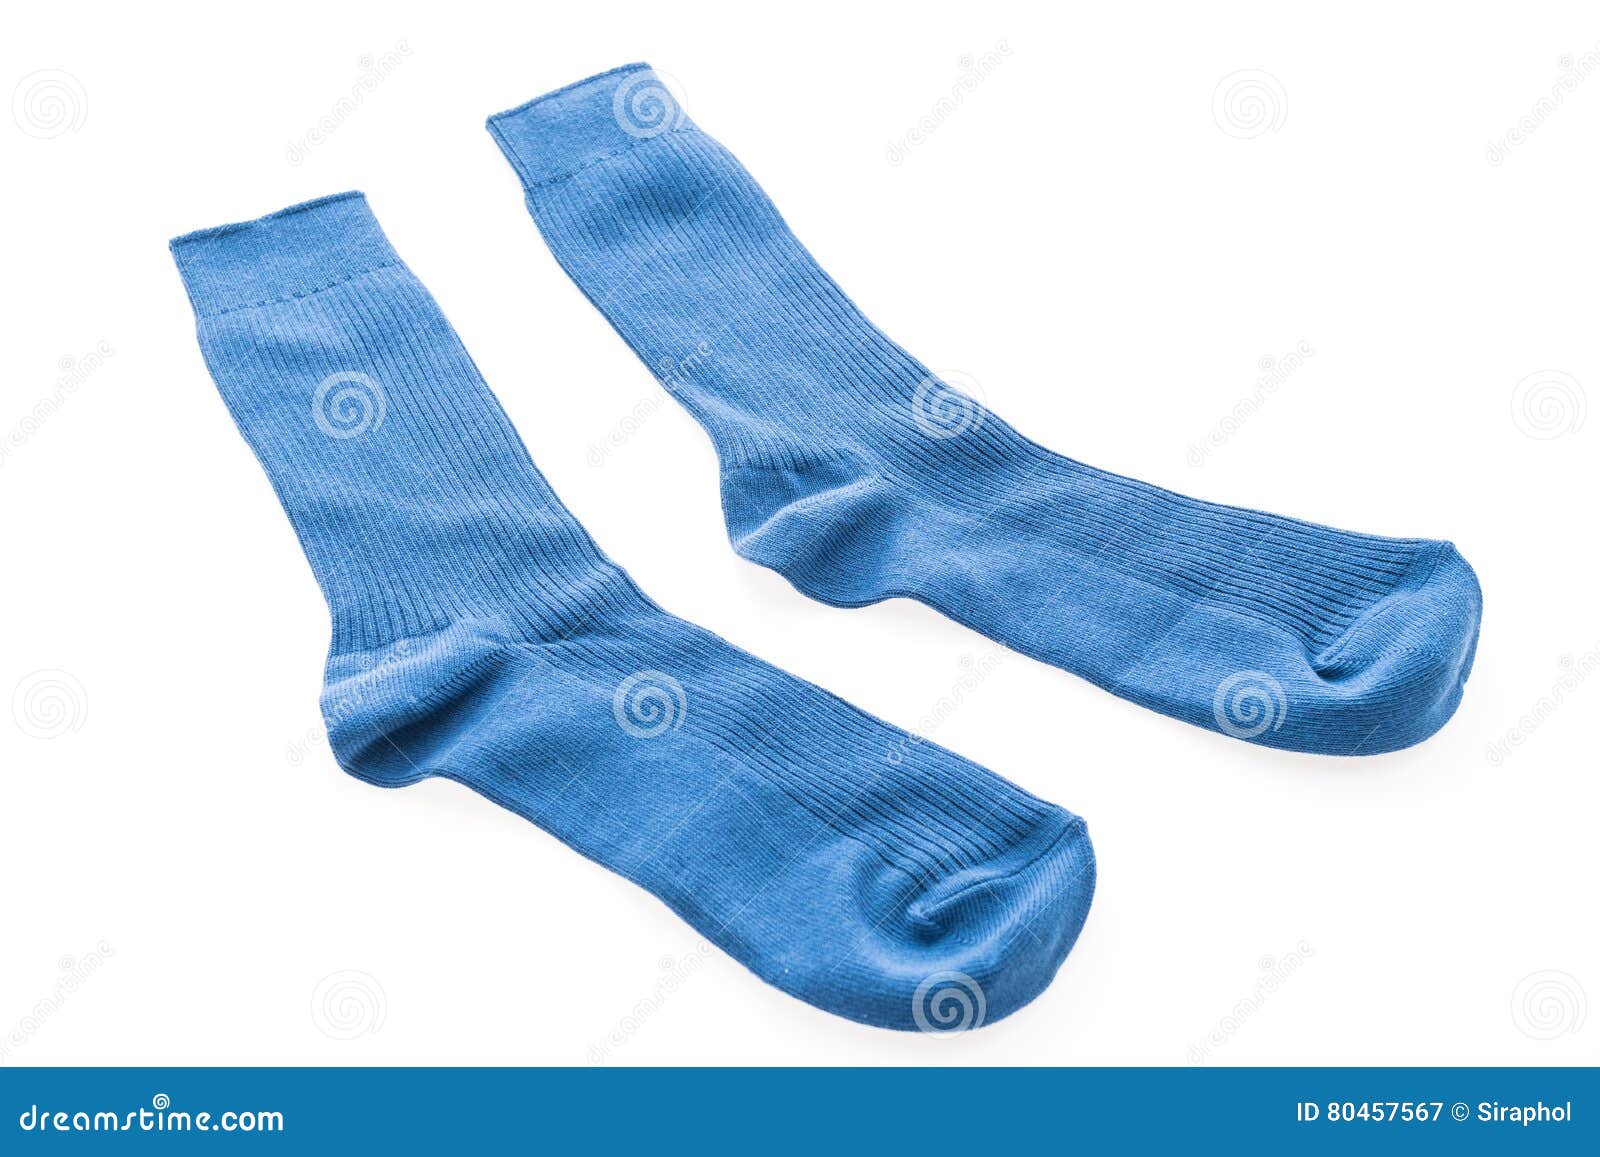 New Socks Isolated on White Stock Image - Image of sport, child: 80457567